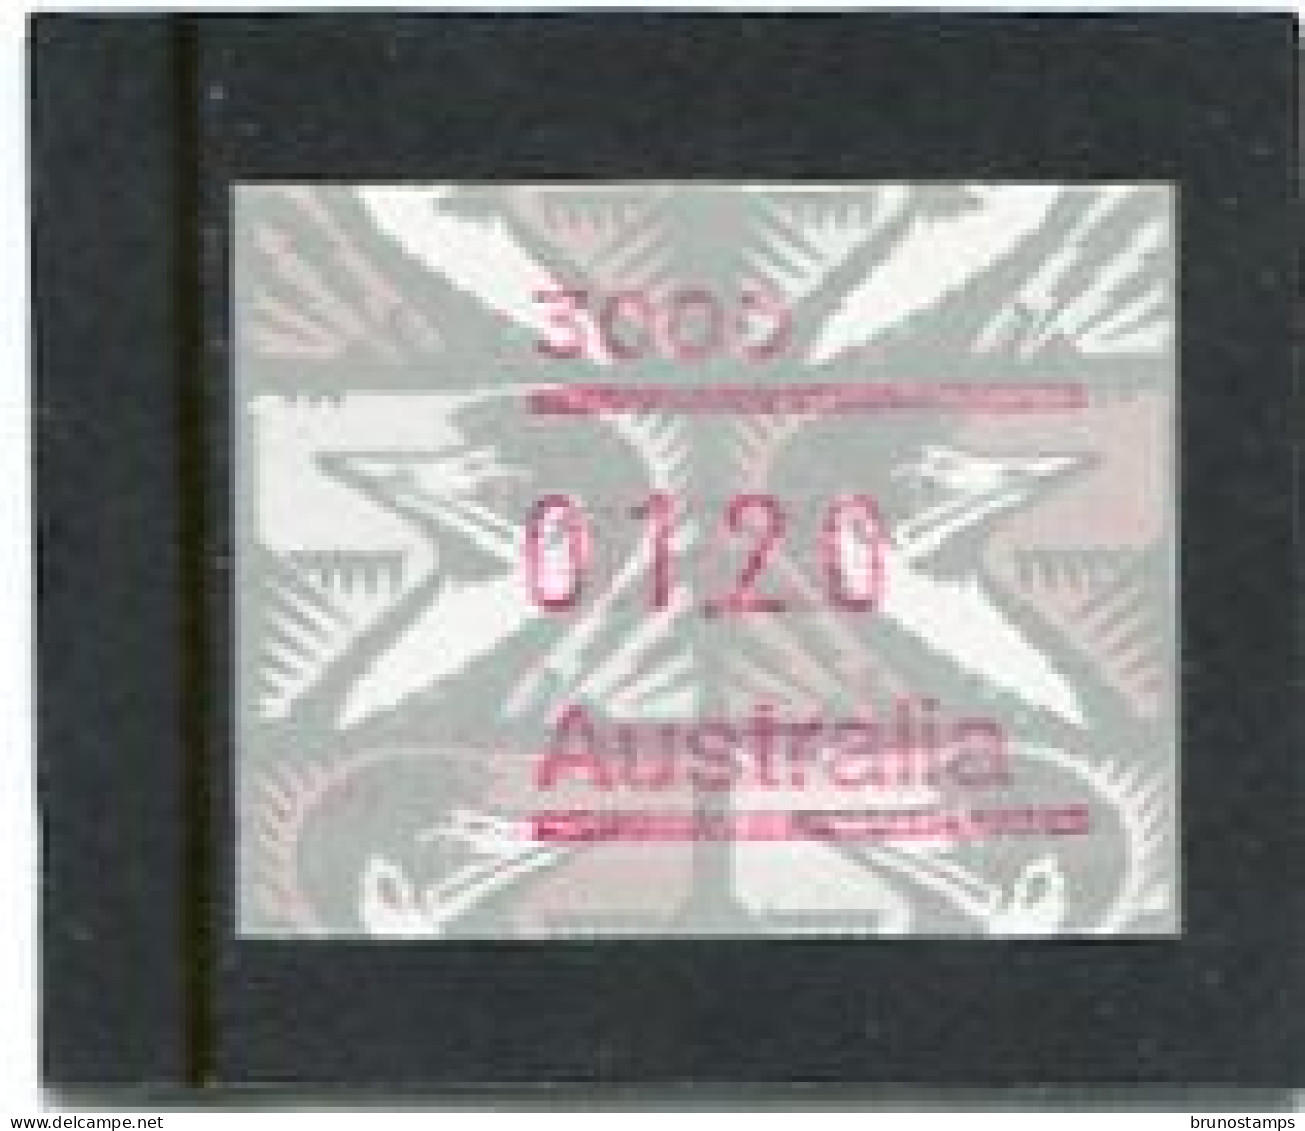 AUSTRALIA - 1992  1.20$  FRAMA  EMU  POSTCODE  3000  (MELBOURNE)  MINT NH - Machine Labels [ATM]